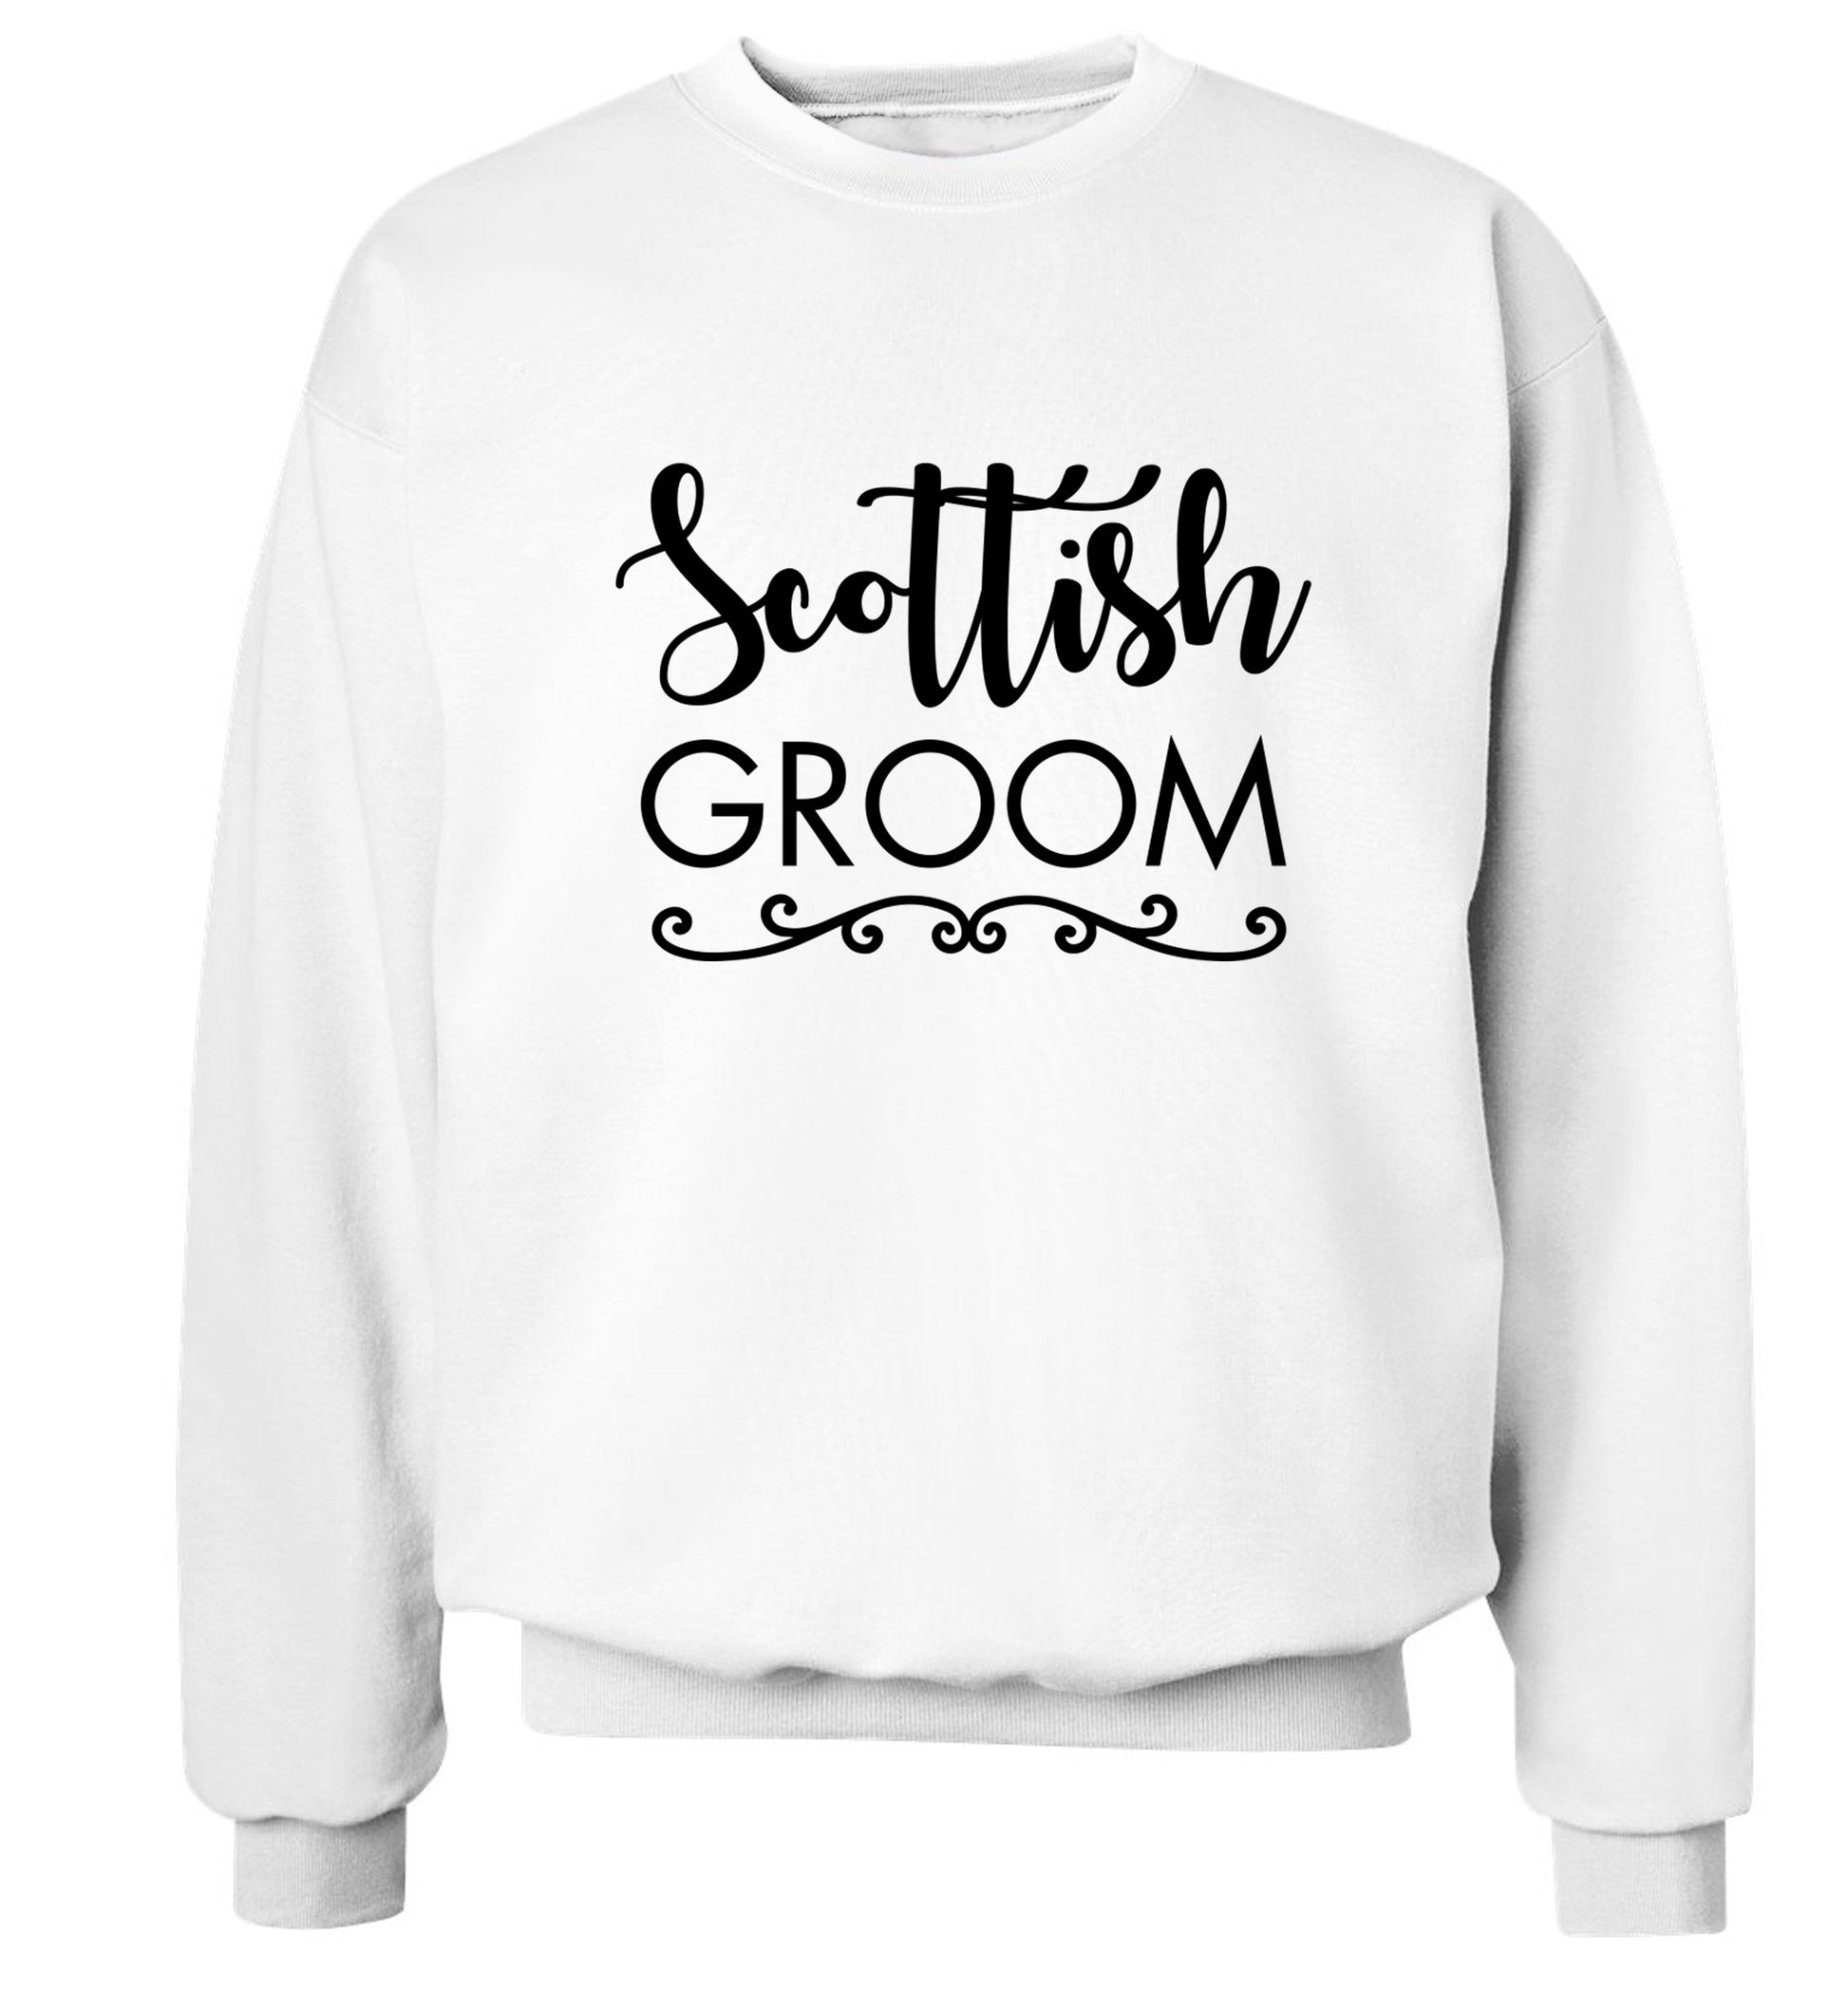 Scottish groom Adult's unisex white Sweater 2XL